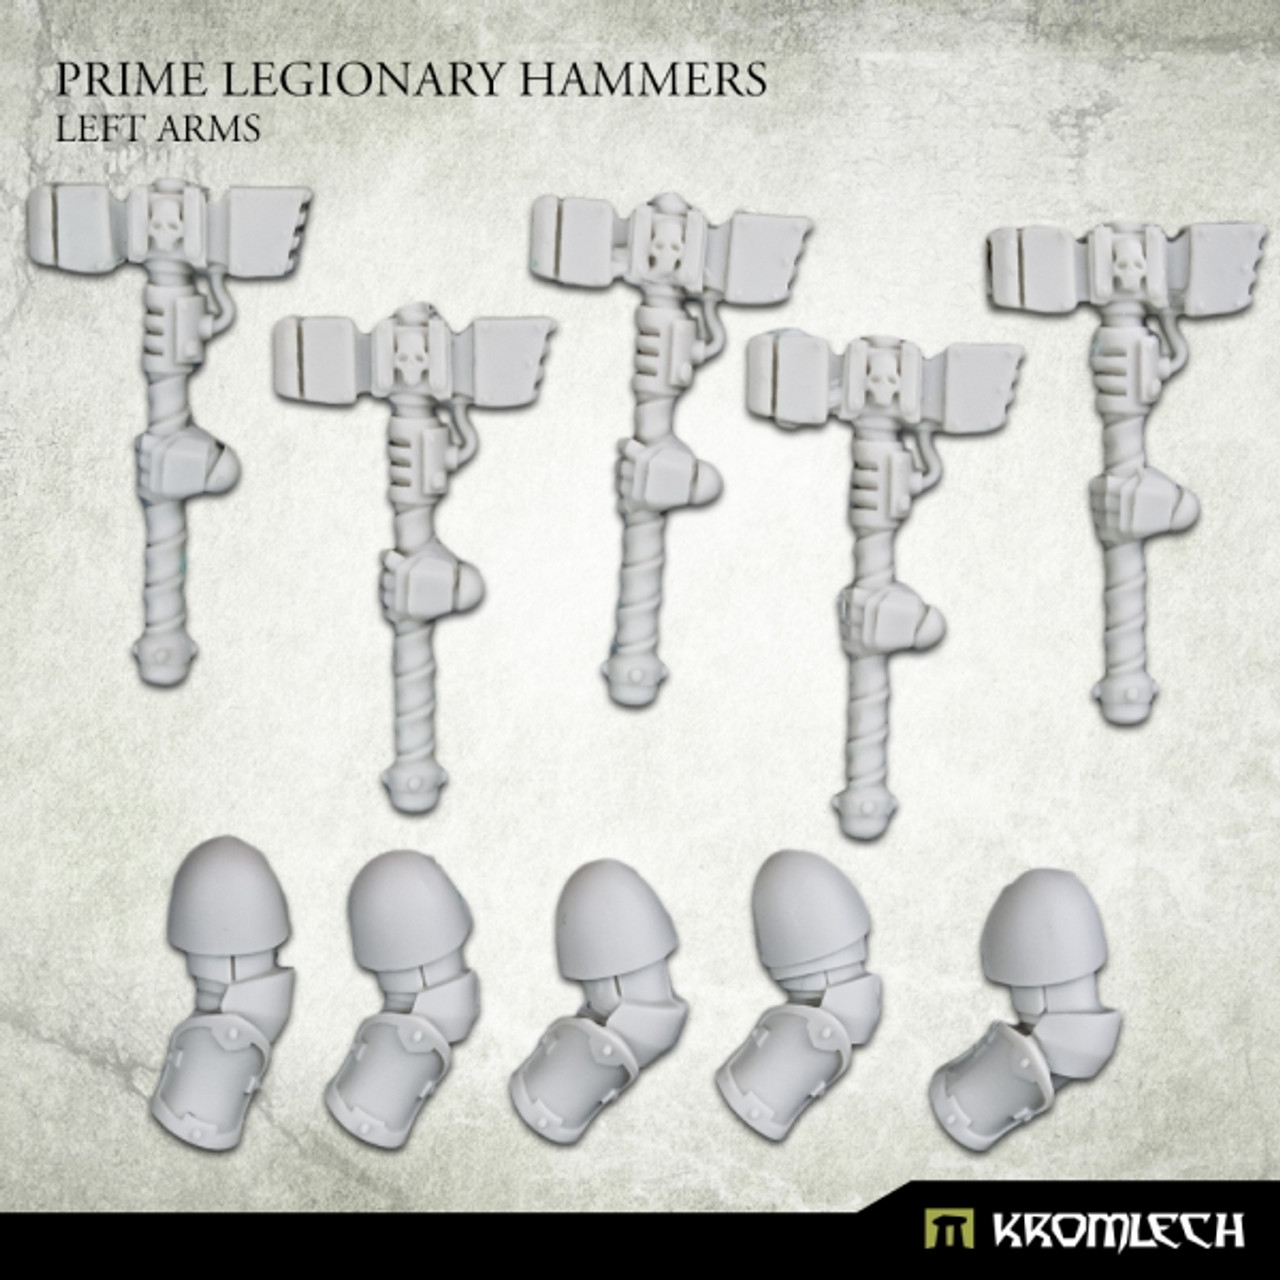 Prime Legionaries CCW Arms: Hammers [left] (5) - KRCB273